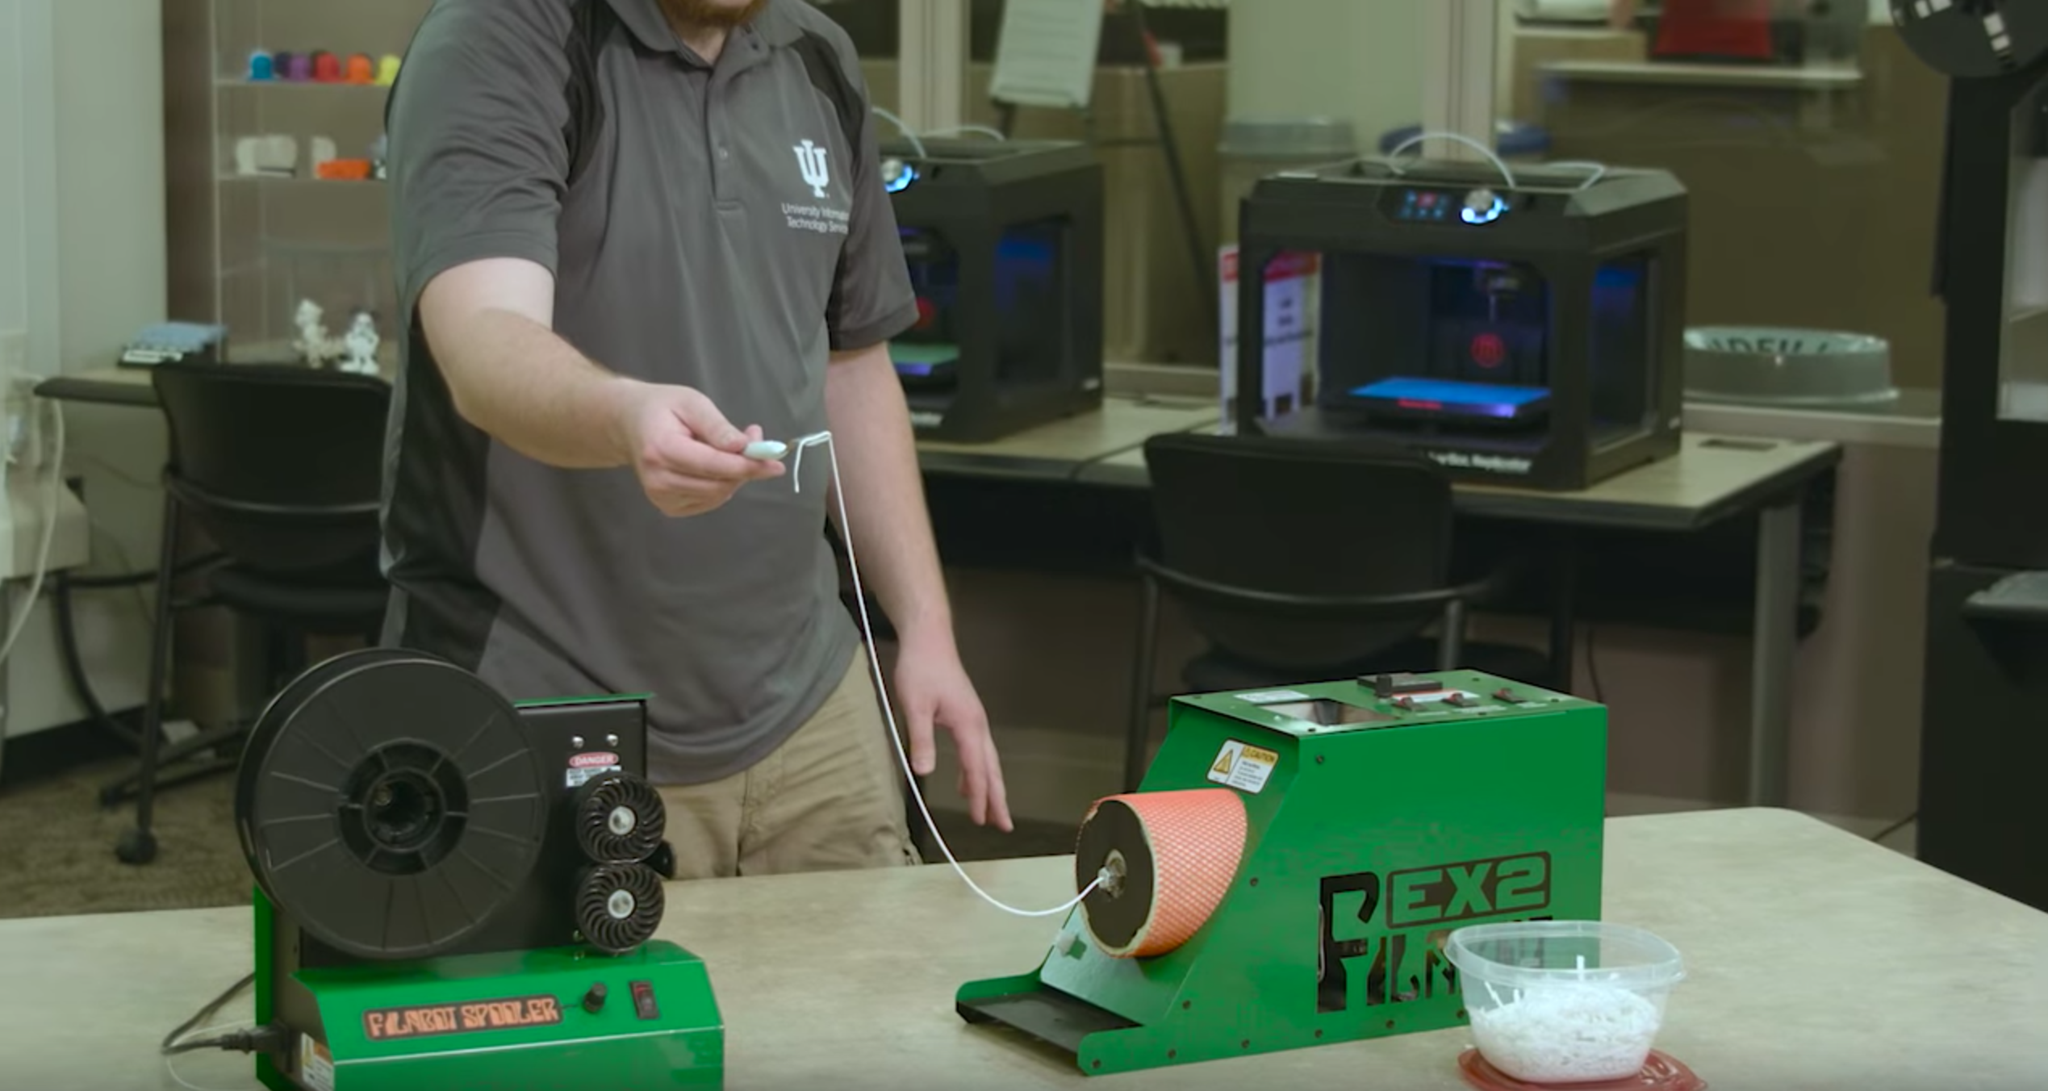 Recycling and creating 3D printing materials at Indiana University